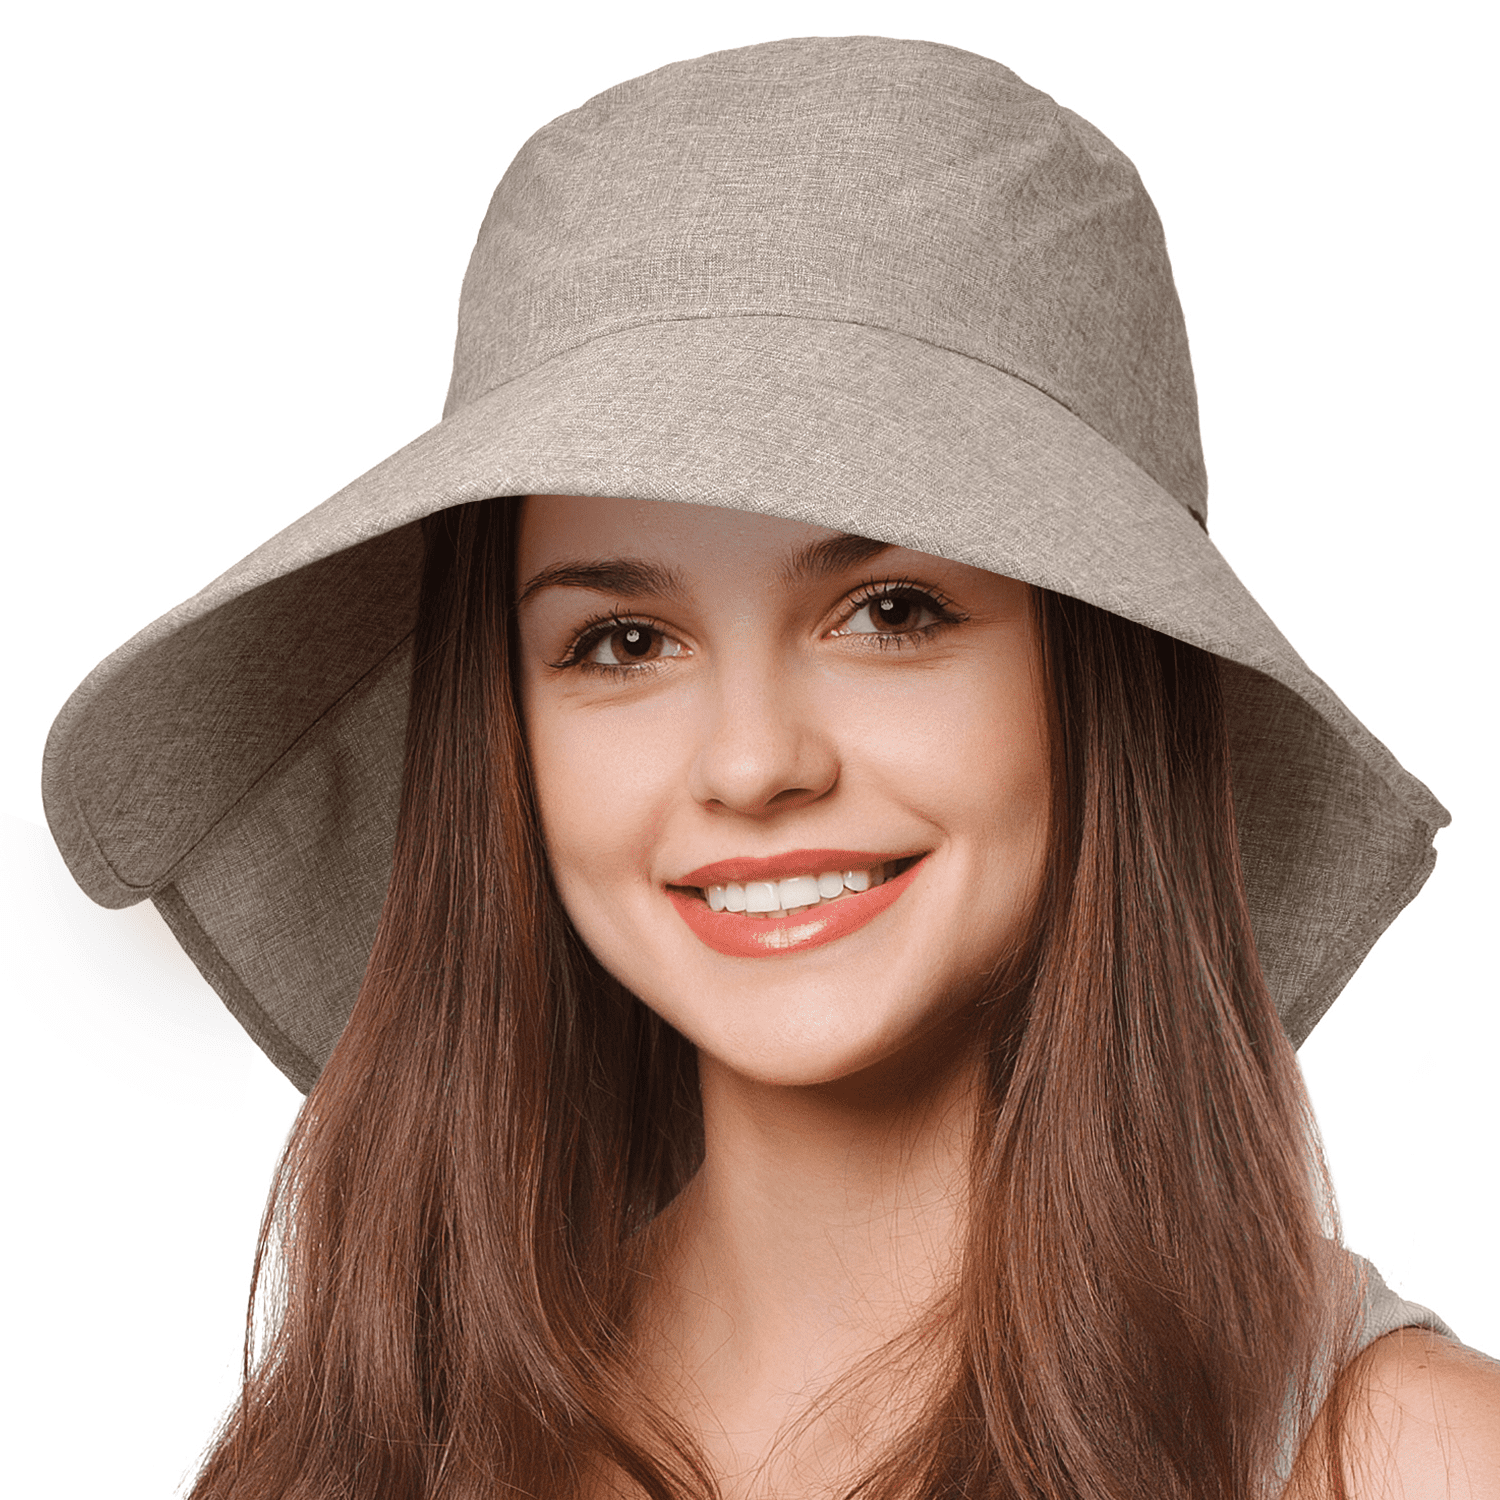 Flyou Sun Hats Foldable Beach Cap for Women UPF50 Wide Brim UV Protection Beach Hat Neck Face Flap Cap 